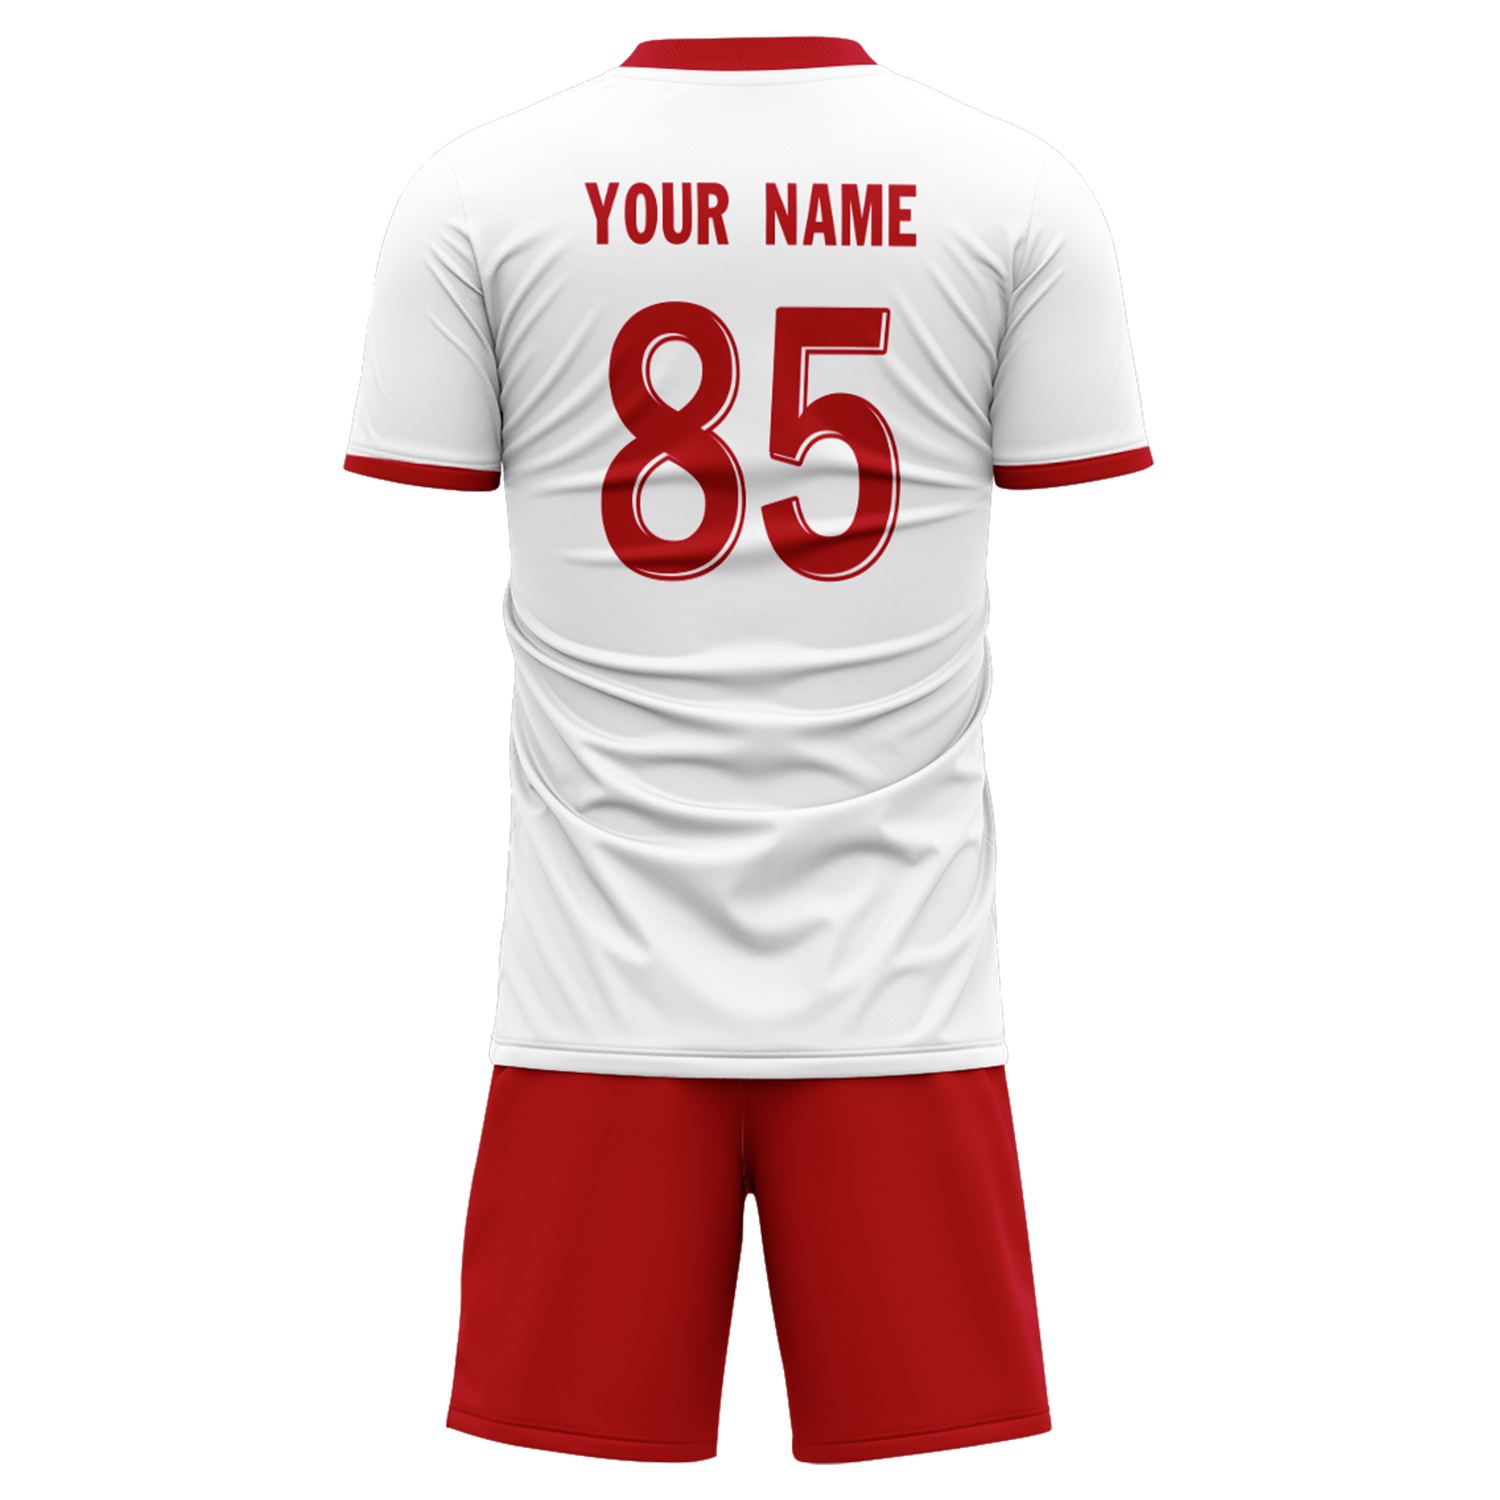 Custom Poland Team Football Suits Personalized Design Print on Demand Soccer Jerseys